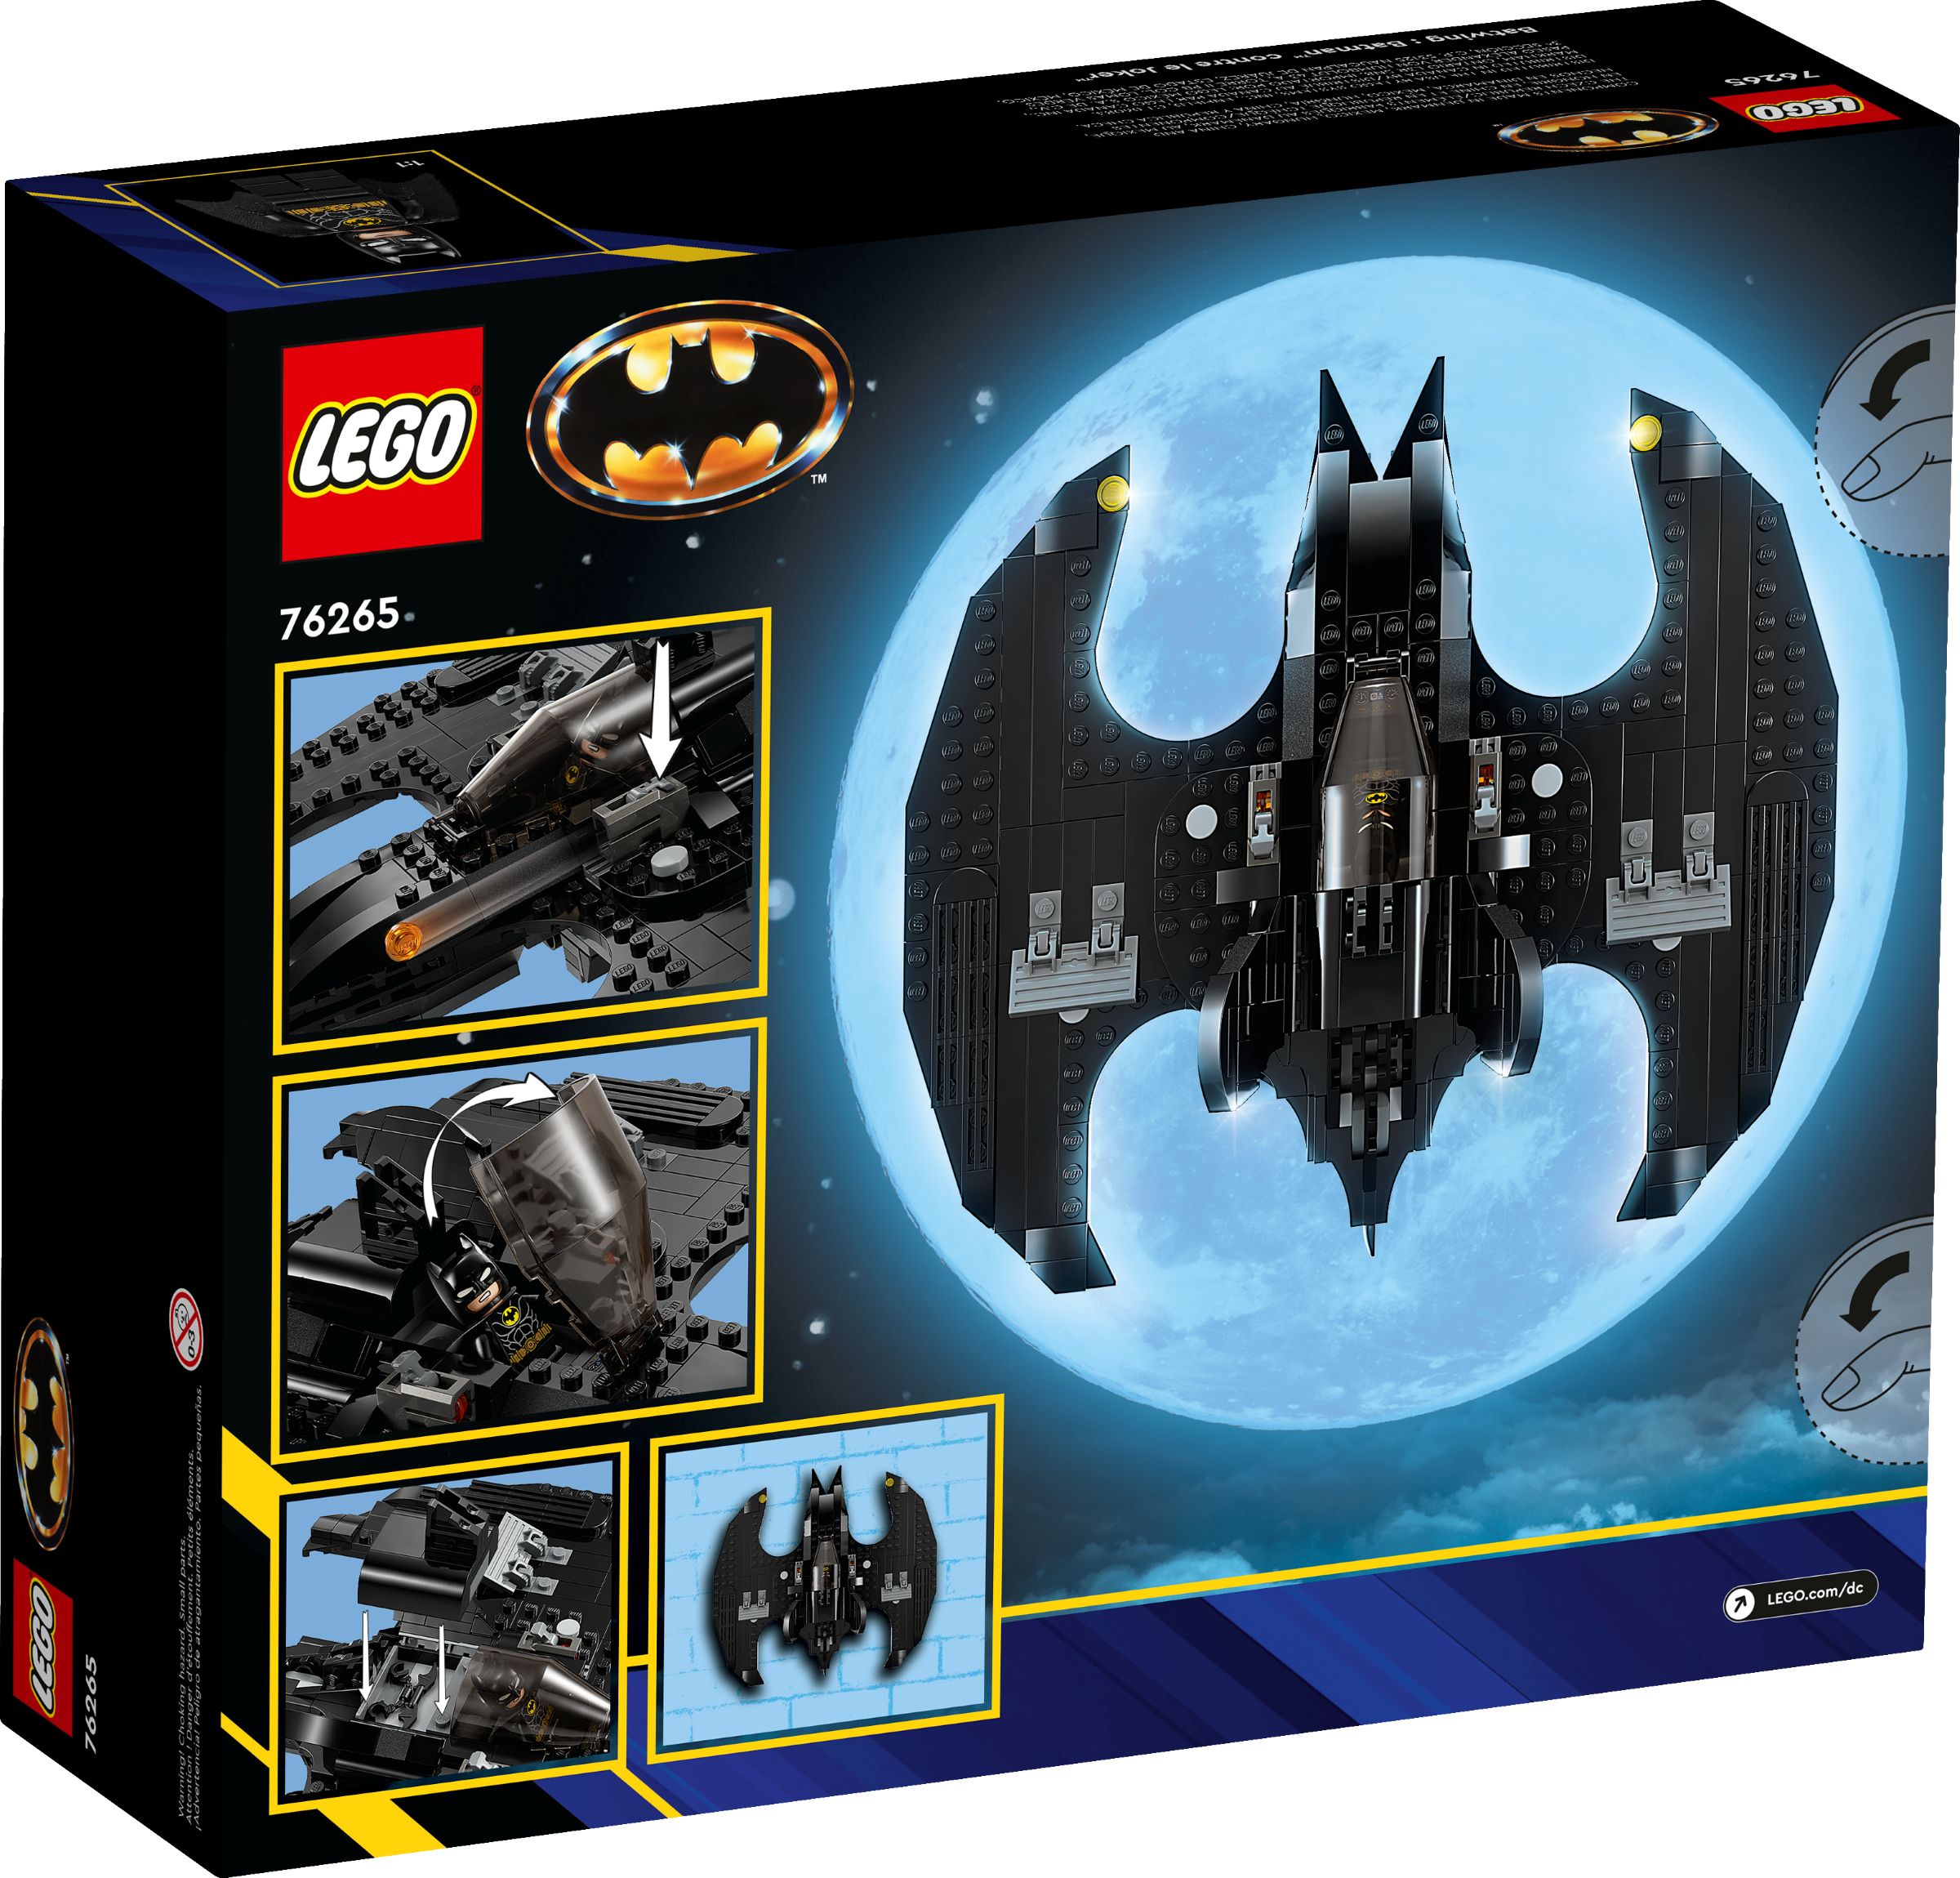 LEGO Super Heroes 76265 Batwing: Batman™ vs. Joker™ LEGO_76265_alt6.jpg